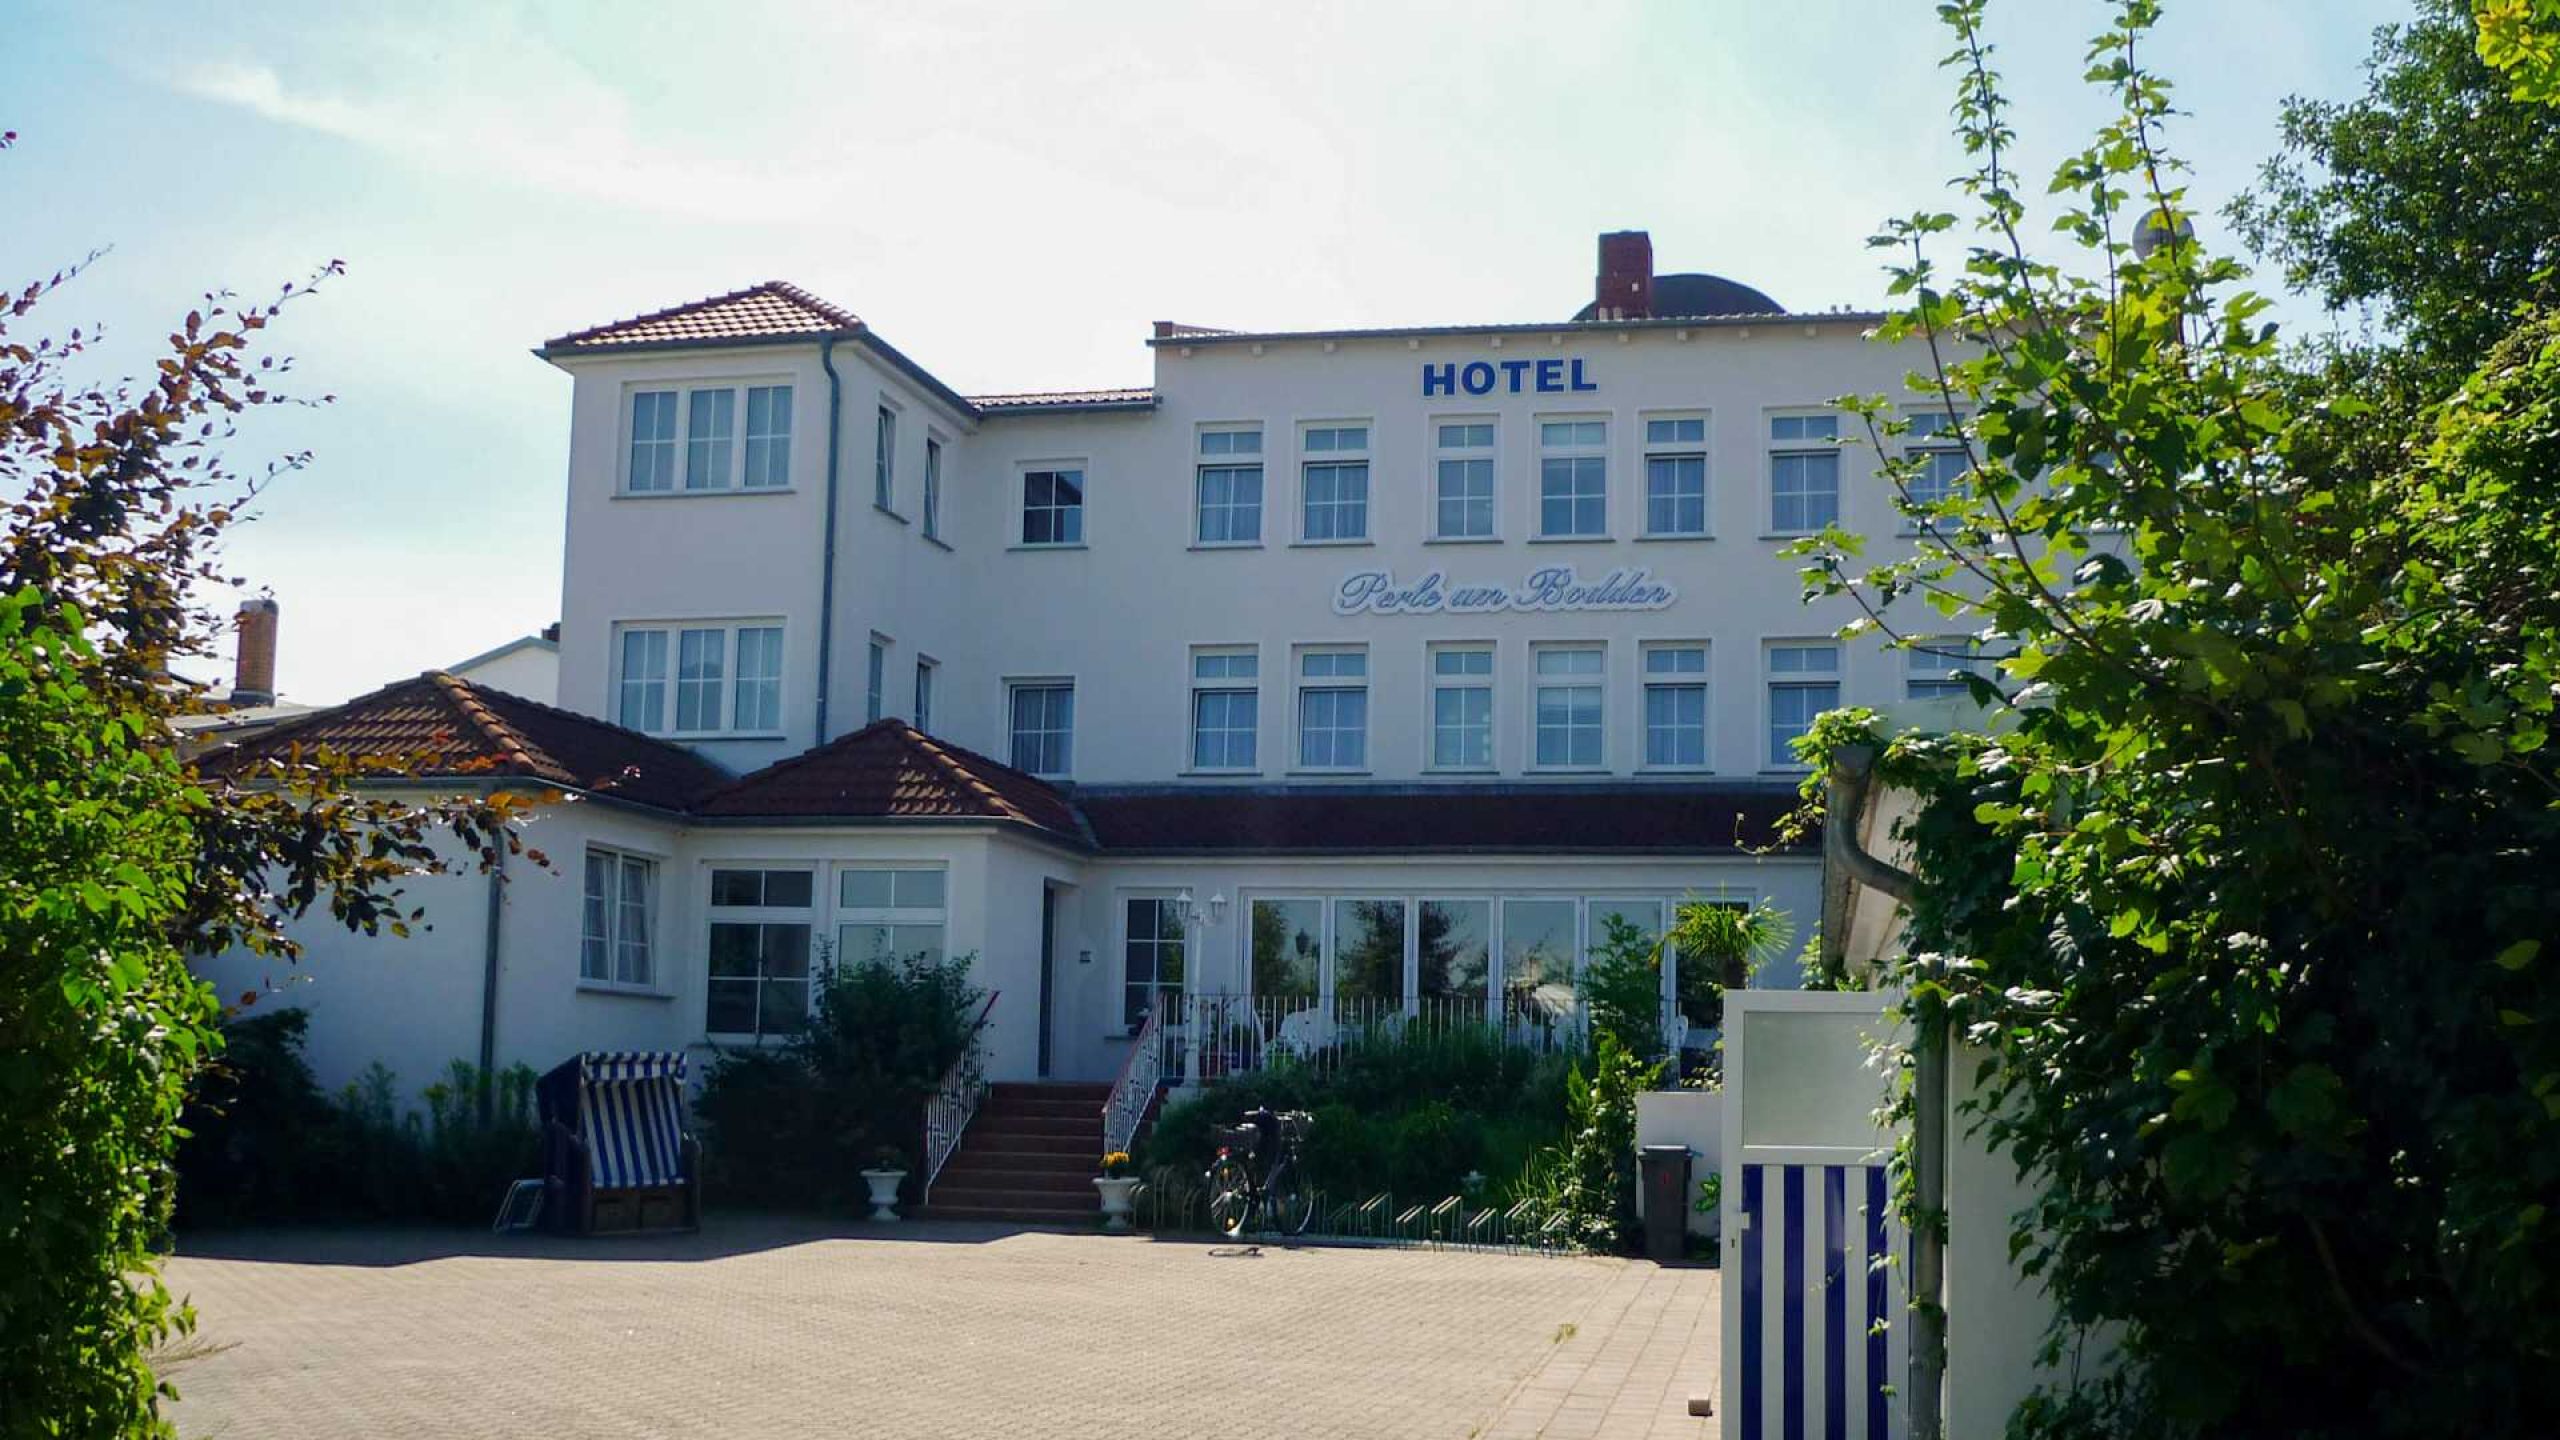 Hotelansicht in Ribnitz-Damgarten